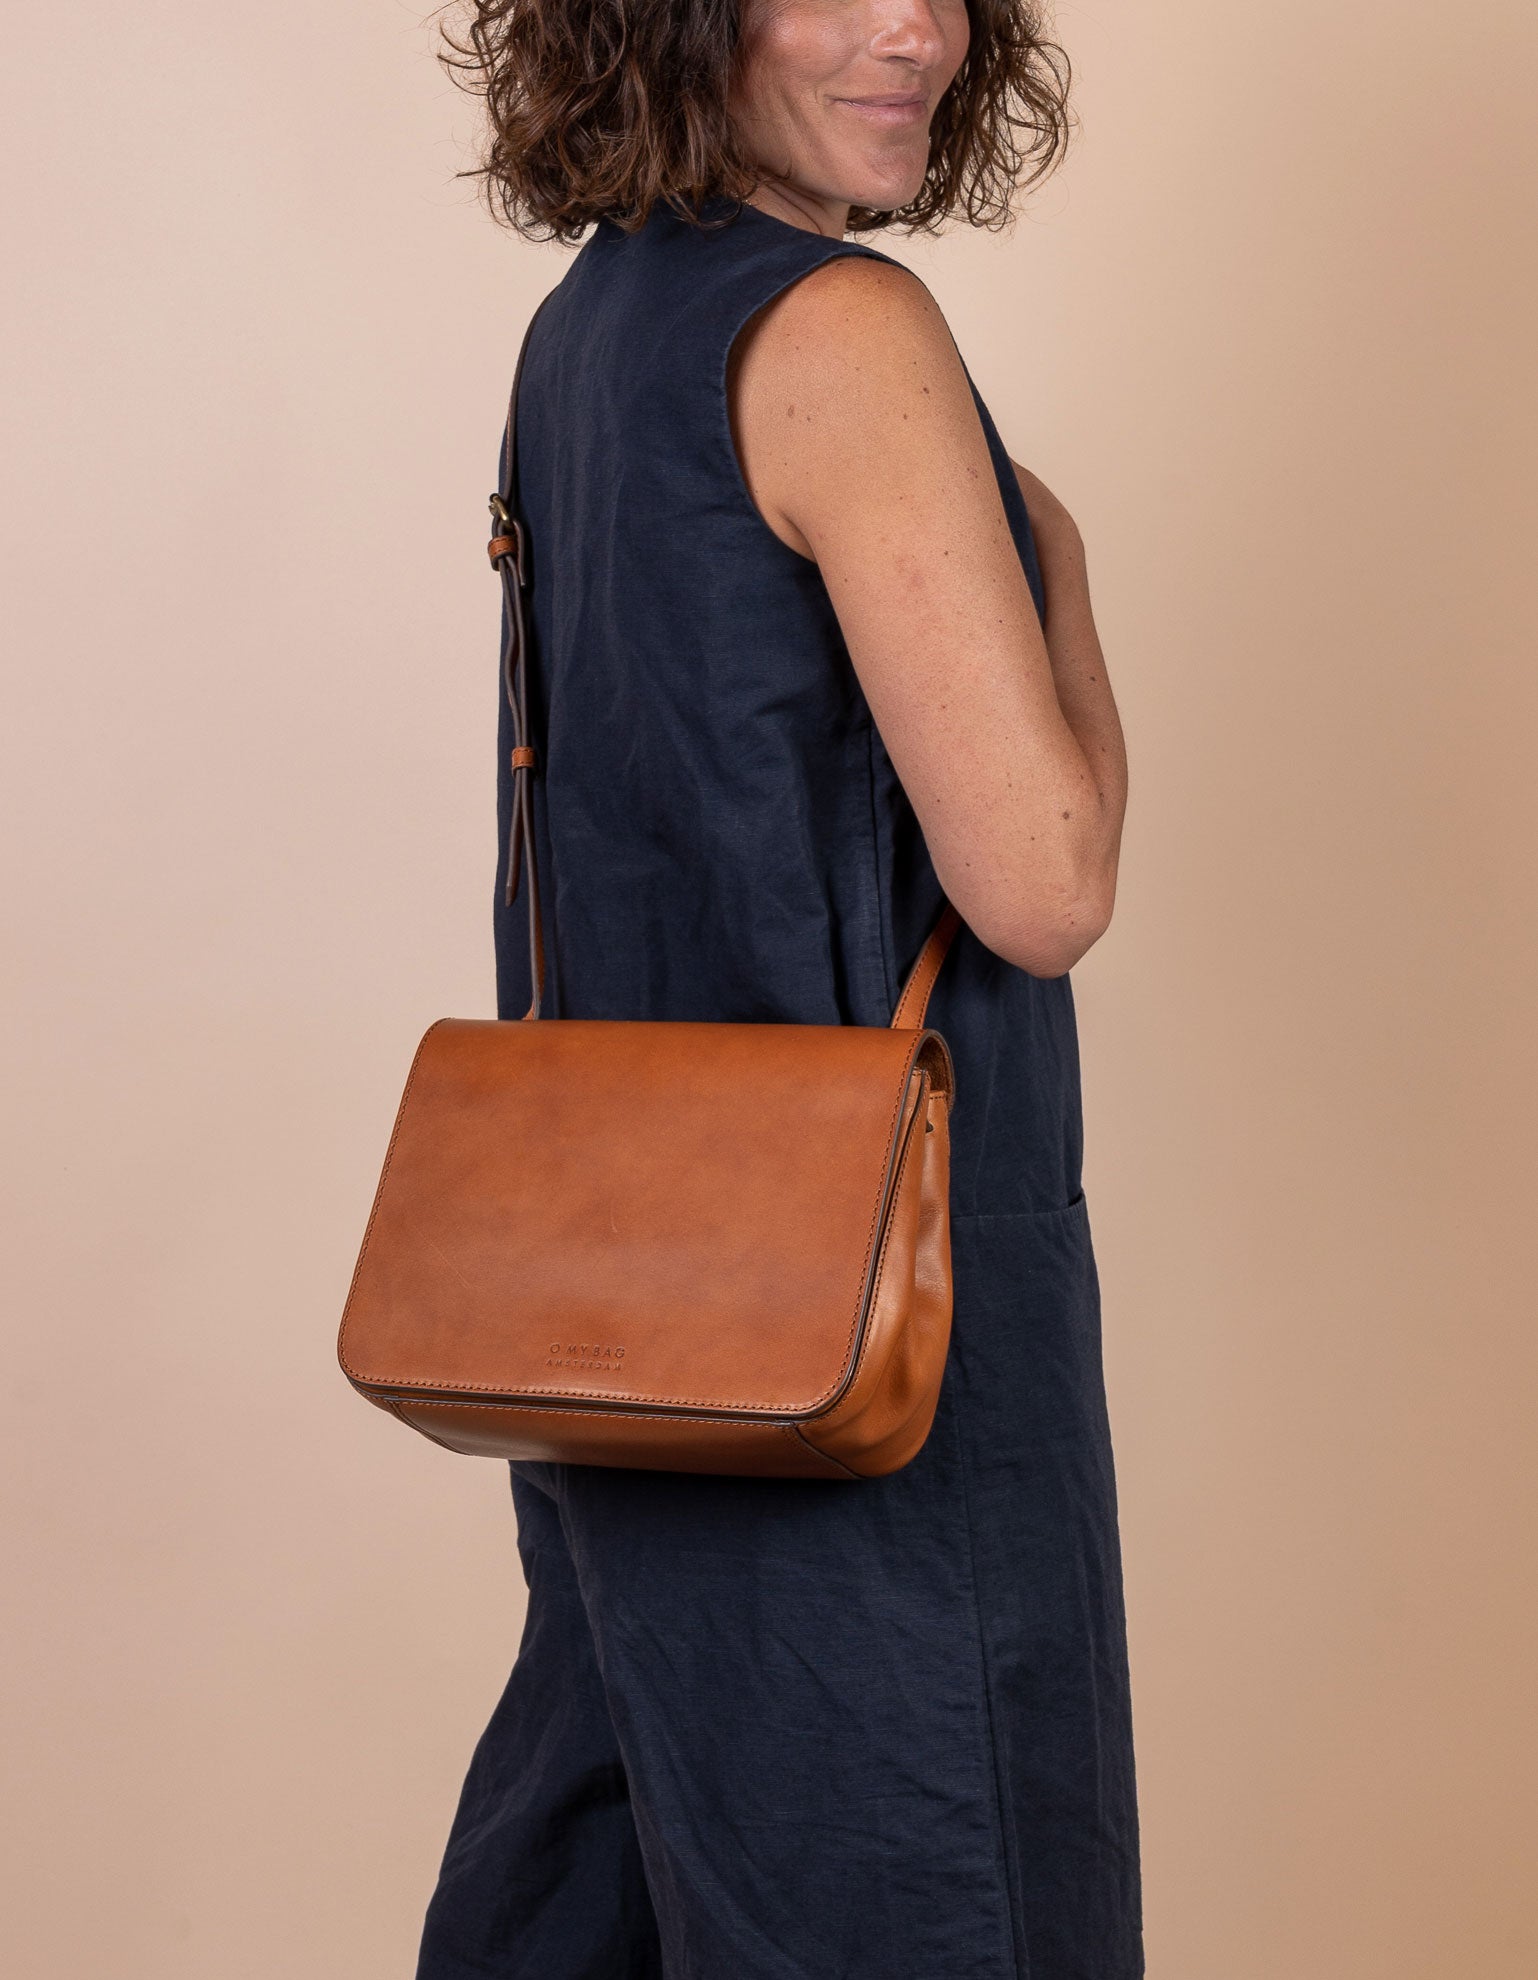 Lucy Cognac Classic Leather Handbag. Model product image.